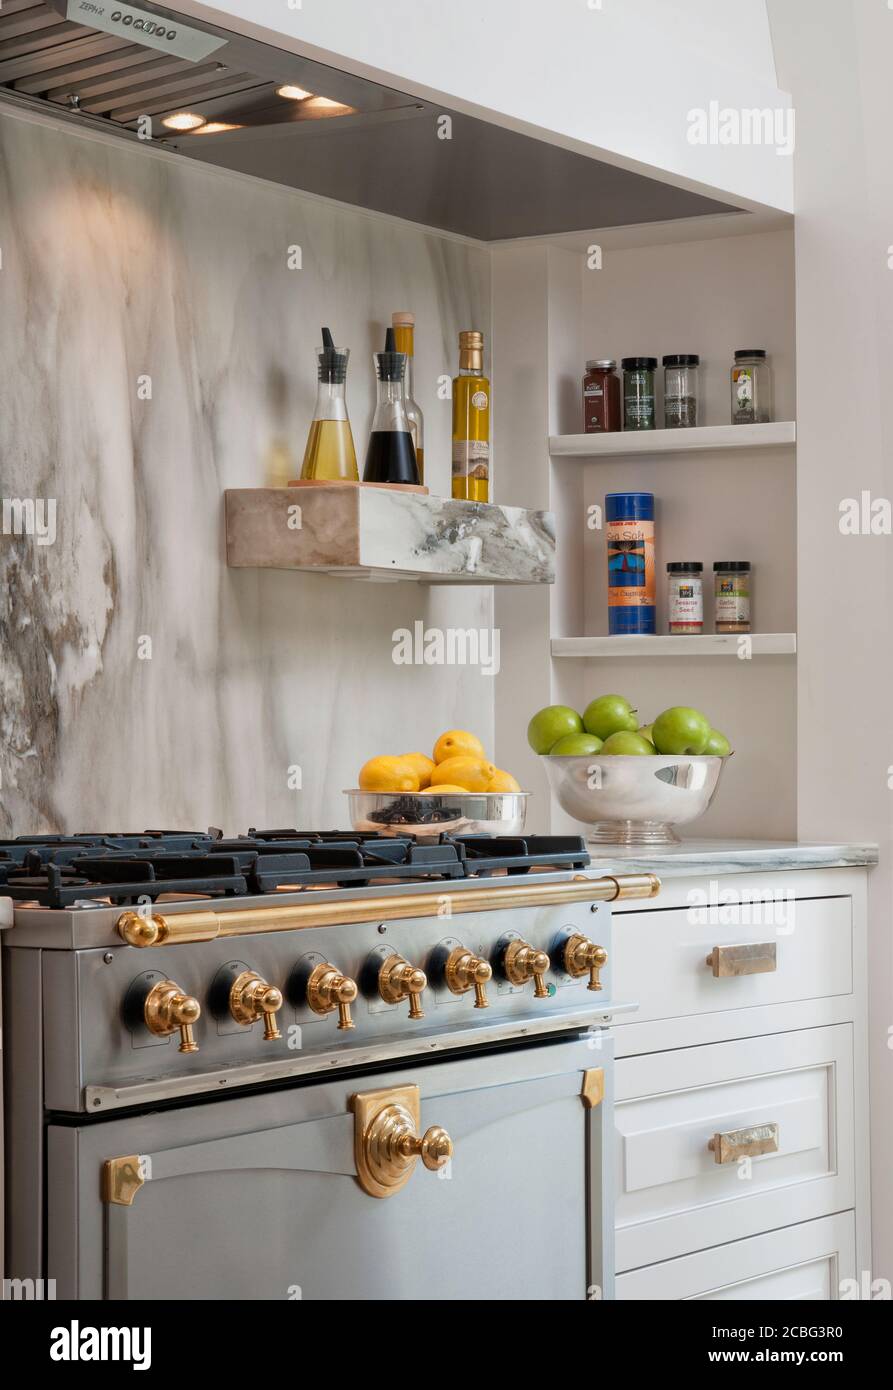 Gray and White Kitchen with Marble Backsplash Stock Photo